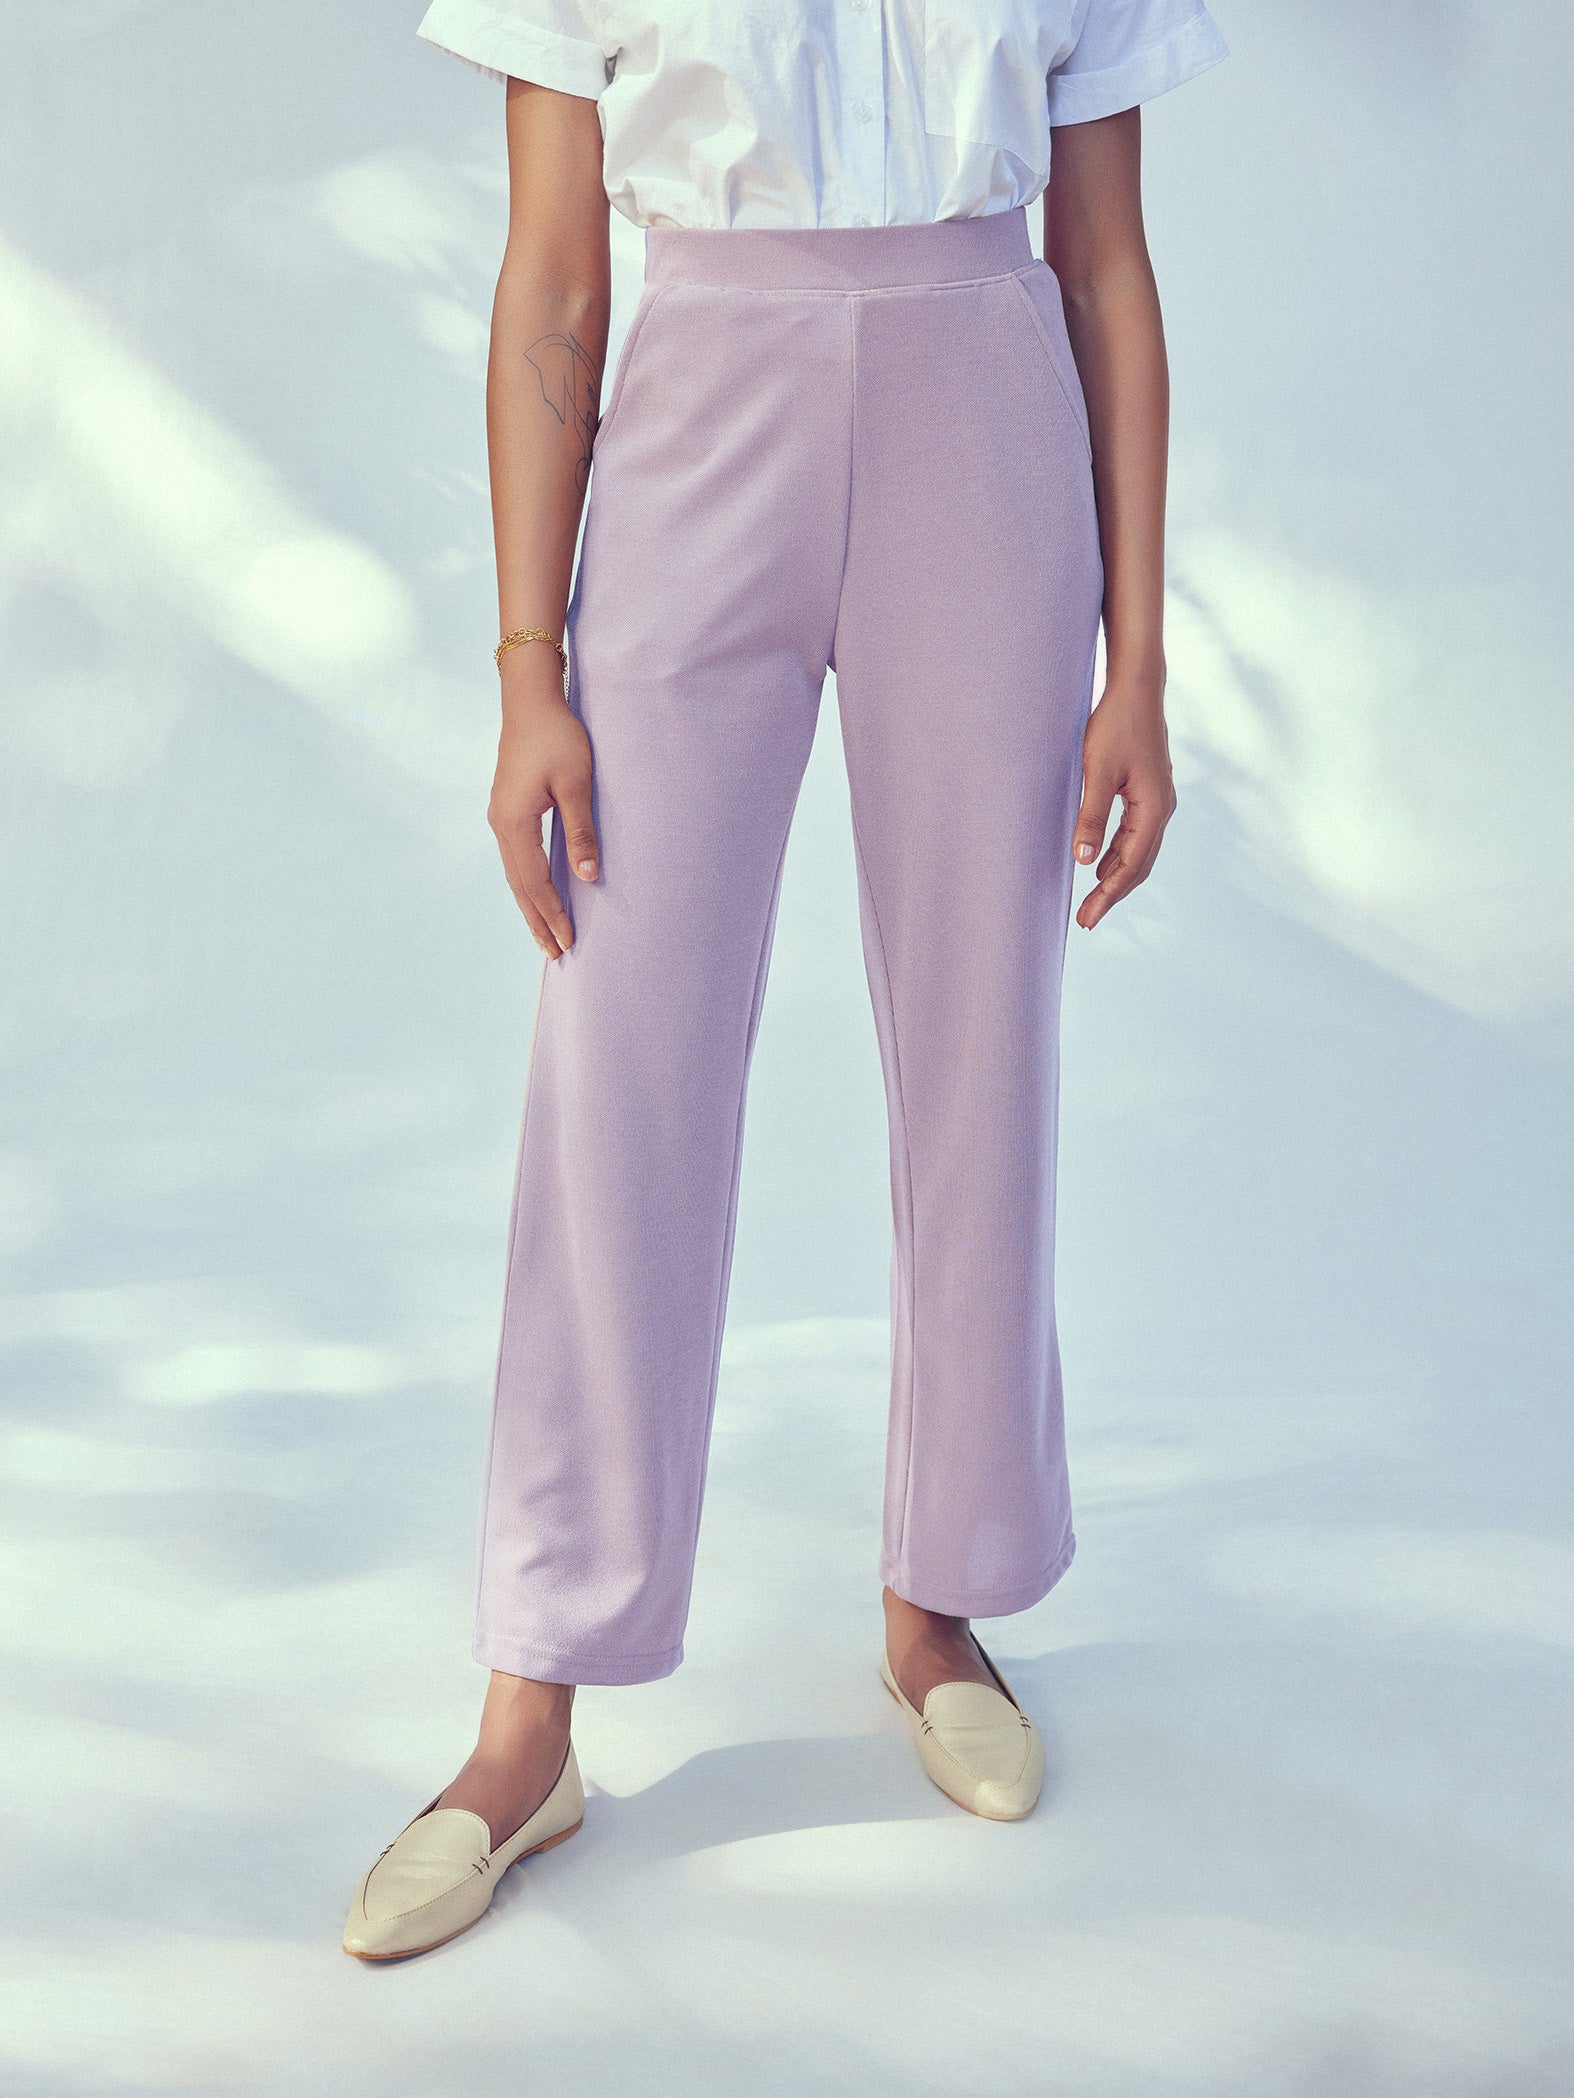 Lilac Knit High Waisted Pants